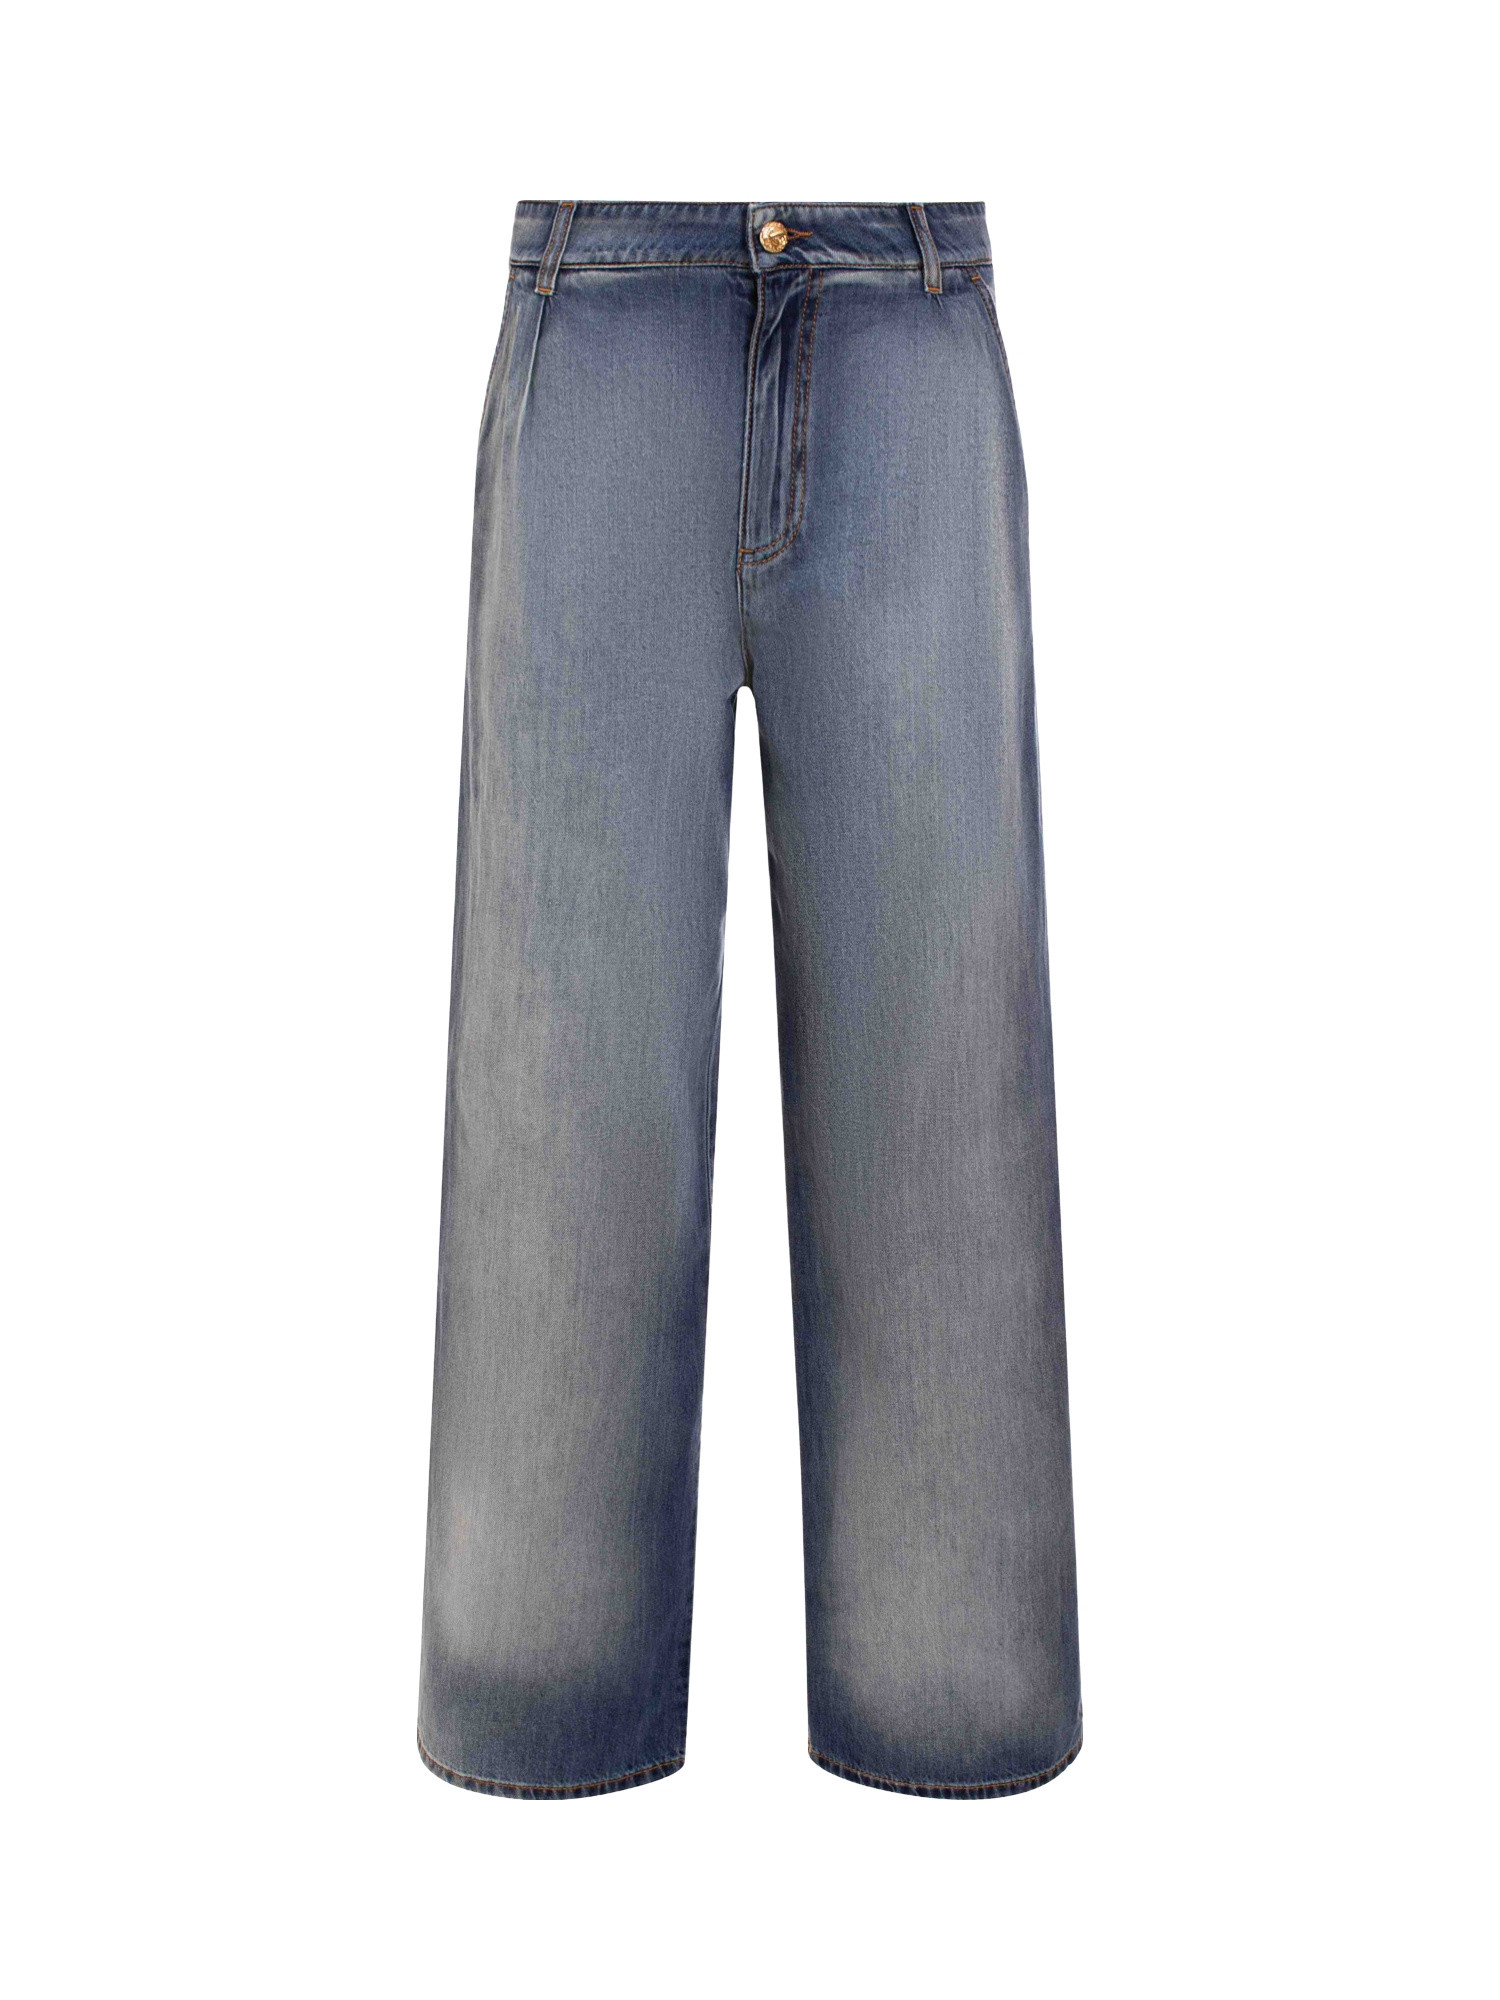 Chiara Ferragni - Low waist over fit jeans, Denim, large image number 0